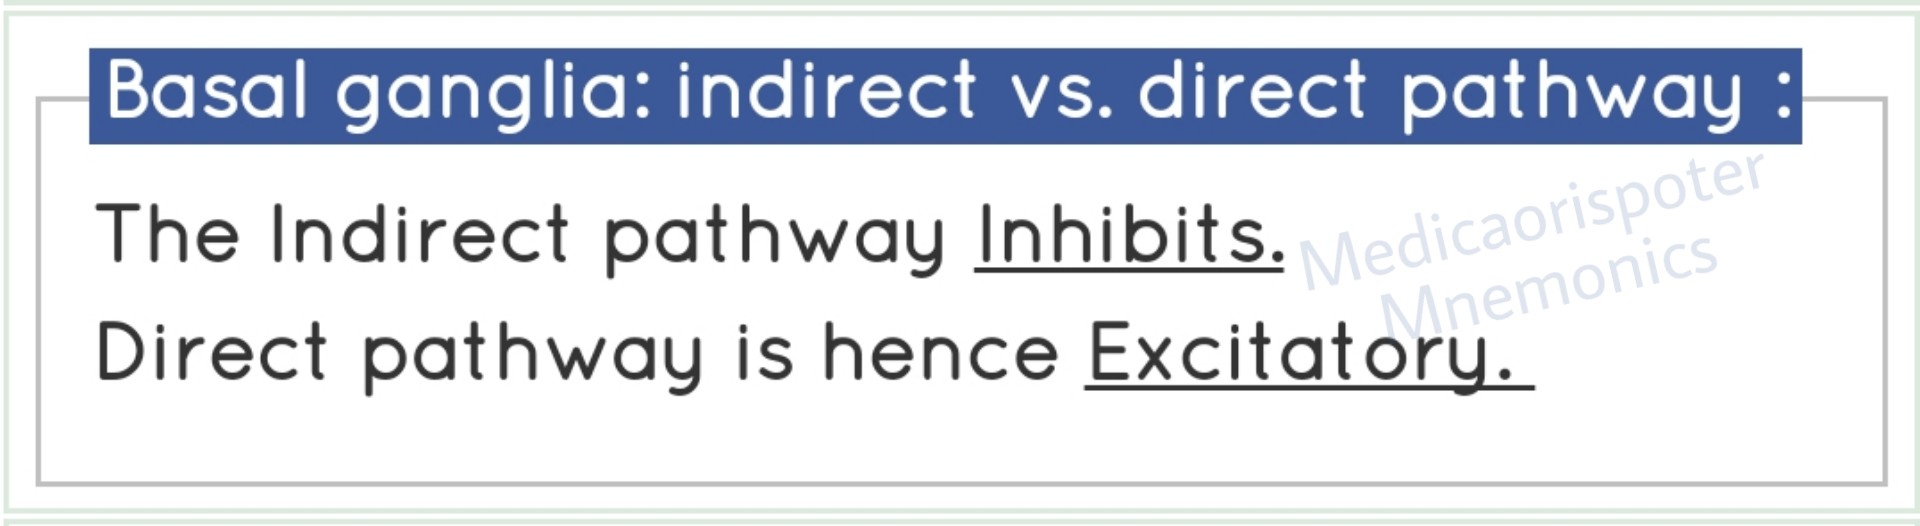 Basal Ganglia Indirect vs Direct Pathway